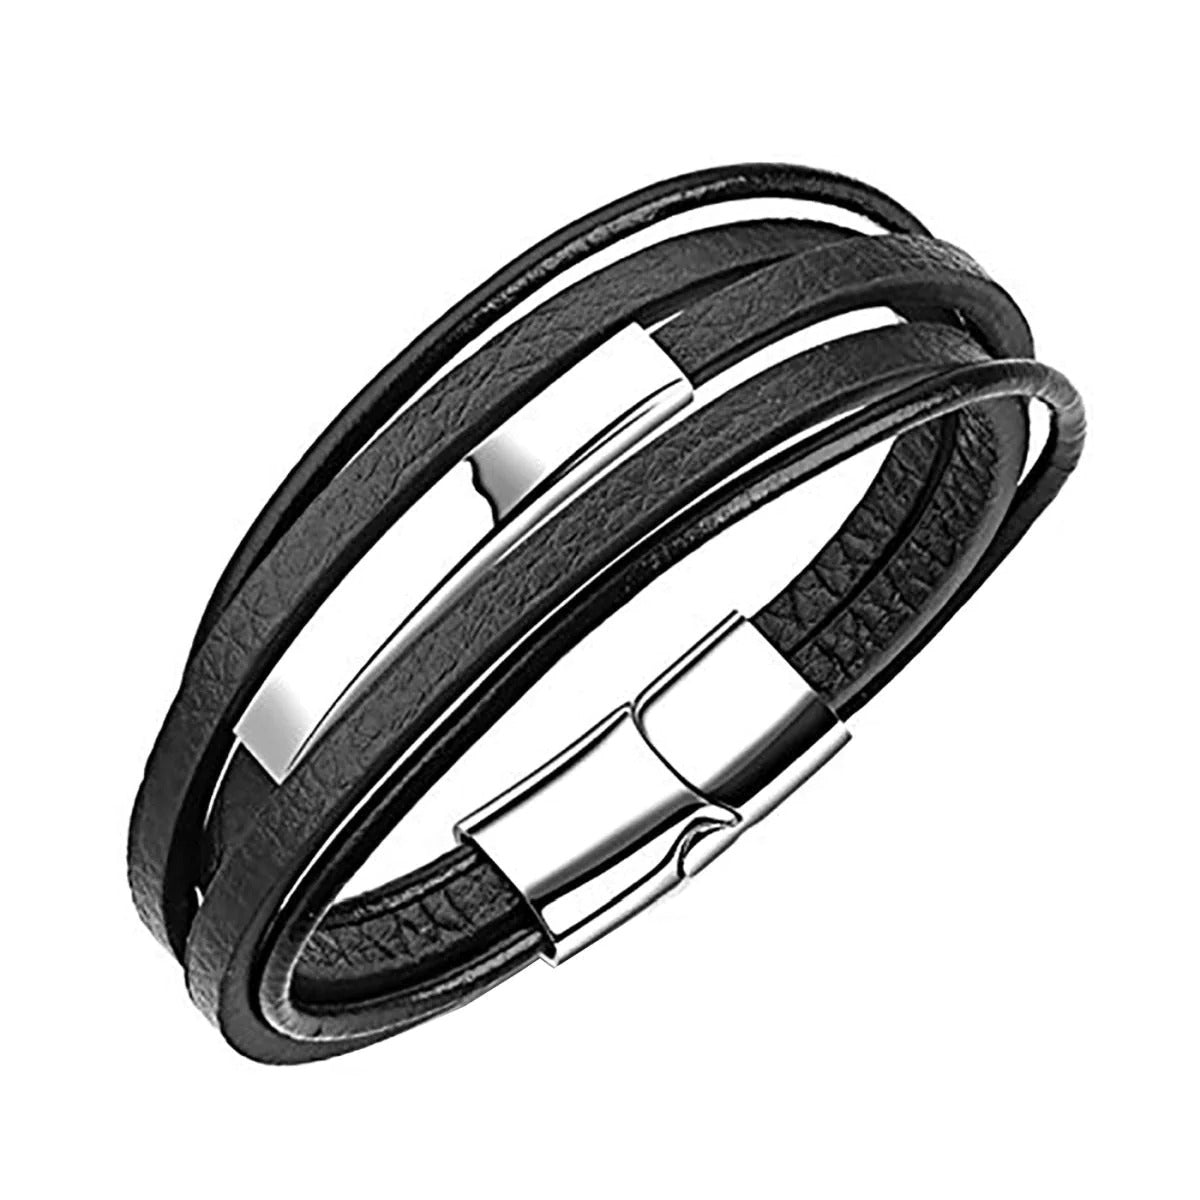 Elegant black leather bracelet